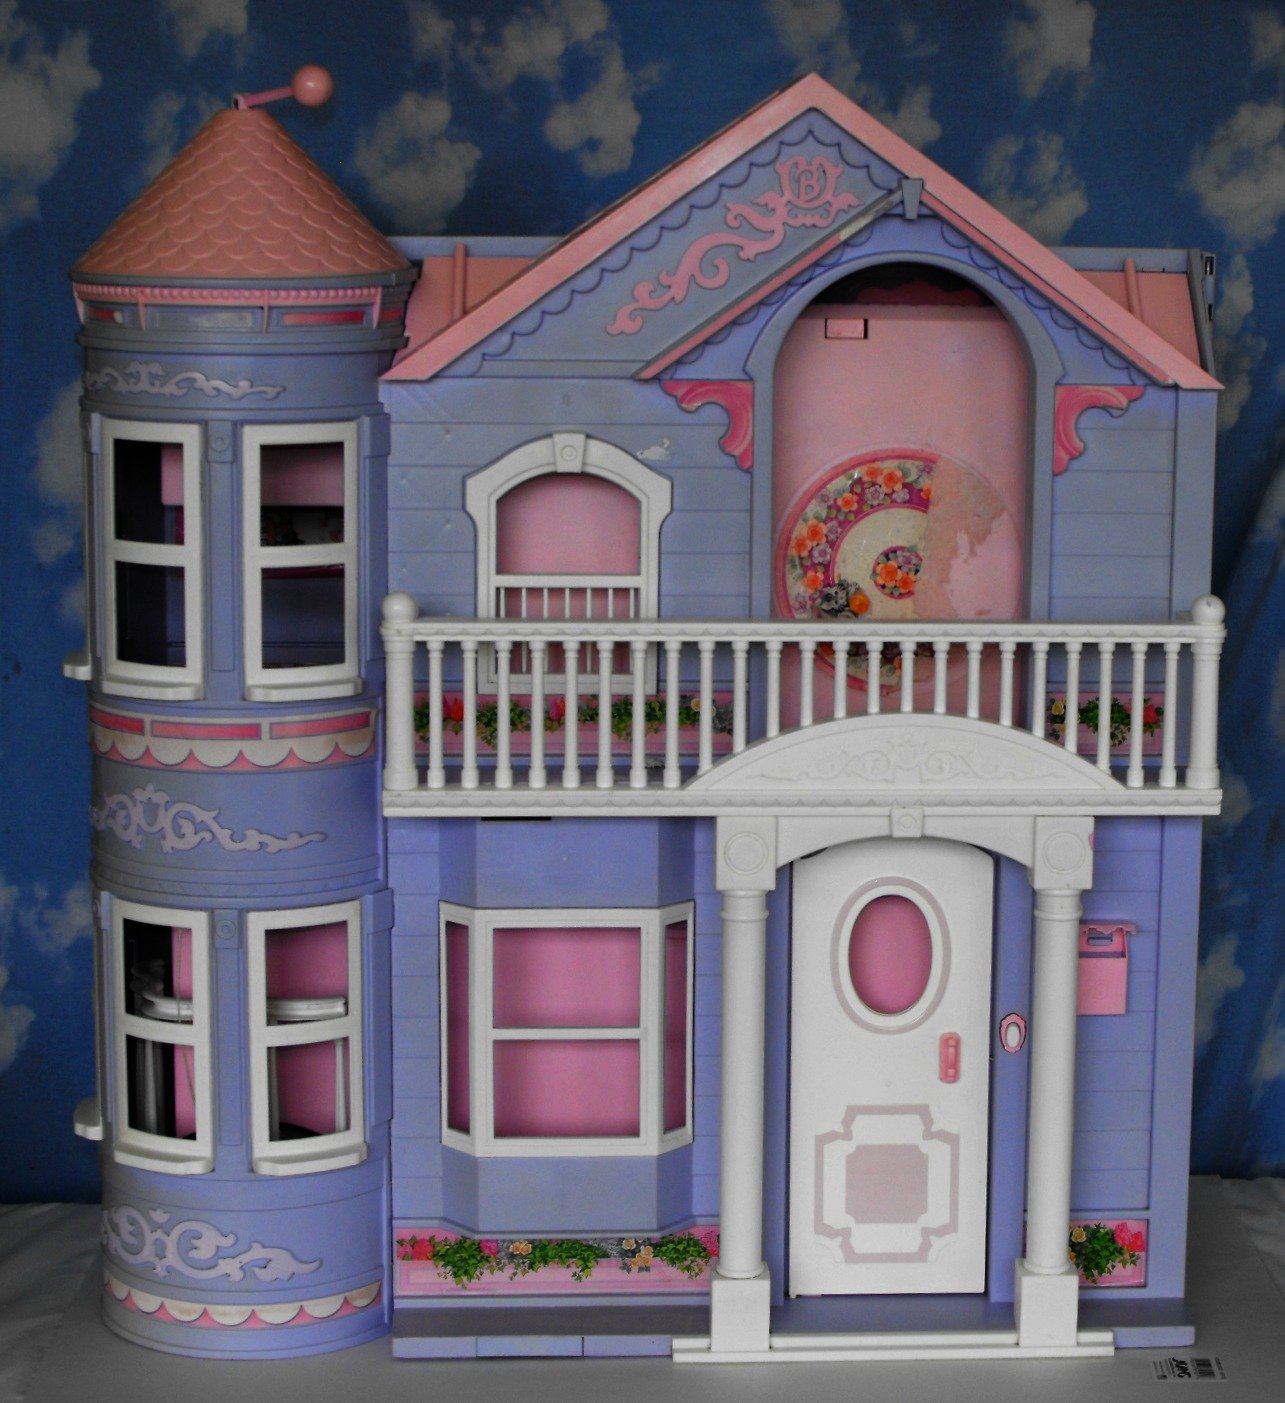 barbie house 2000